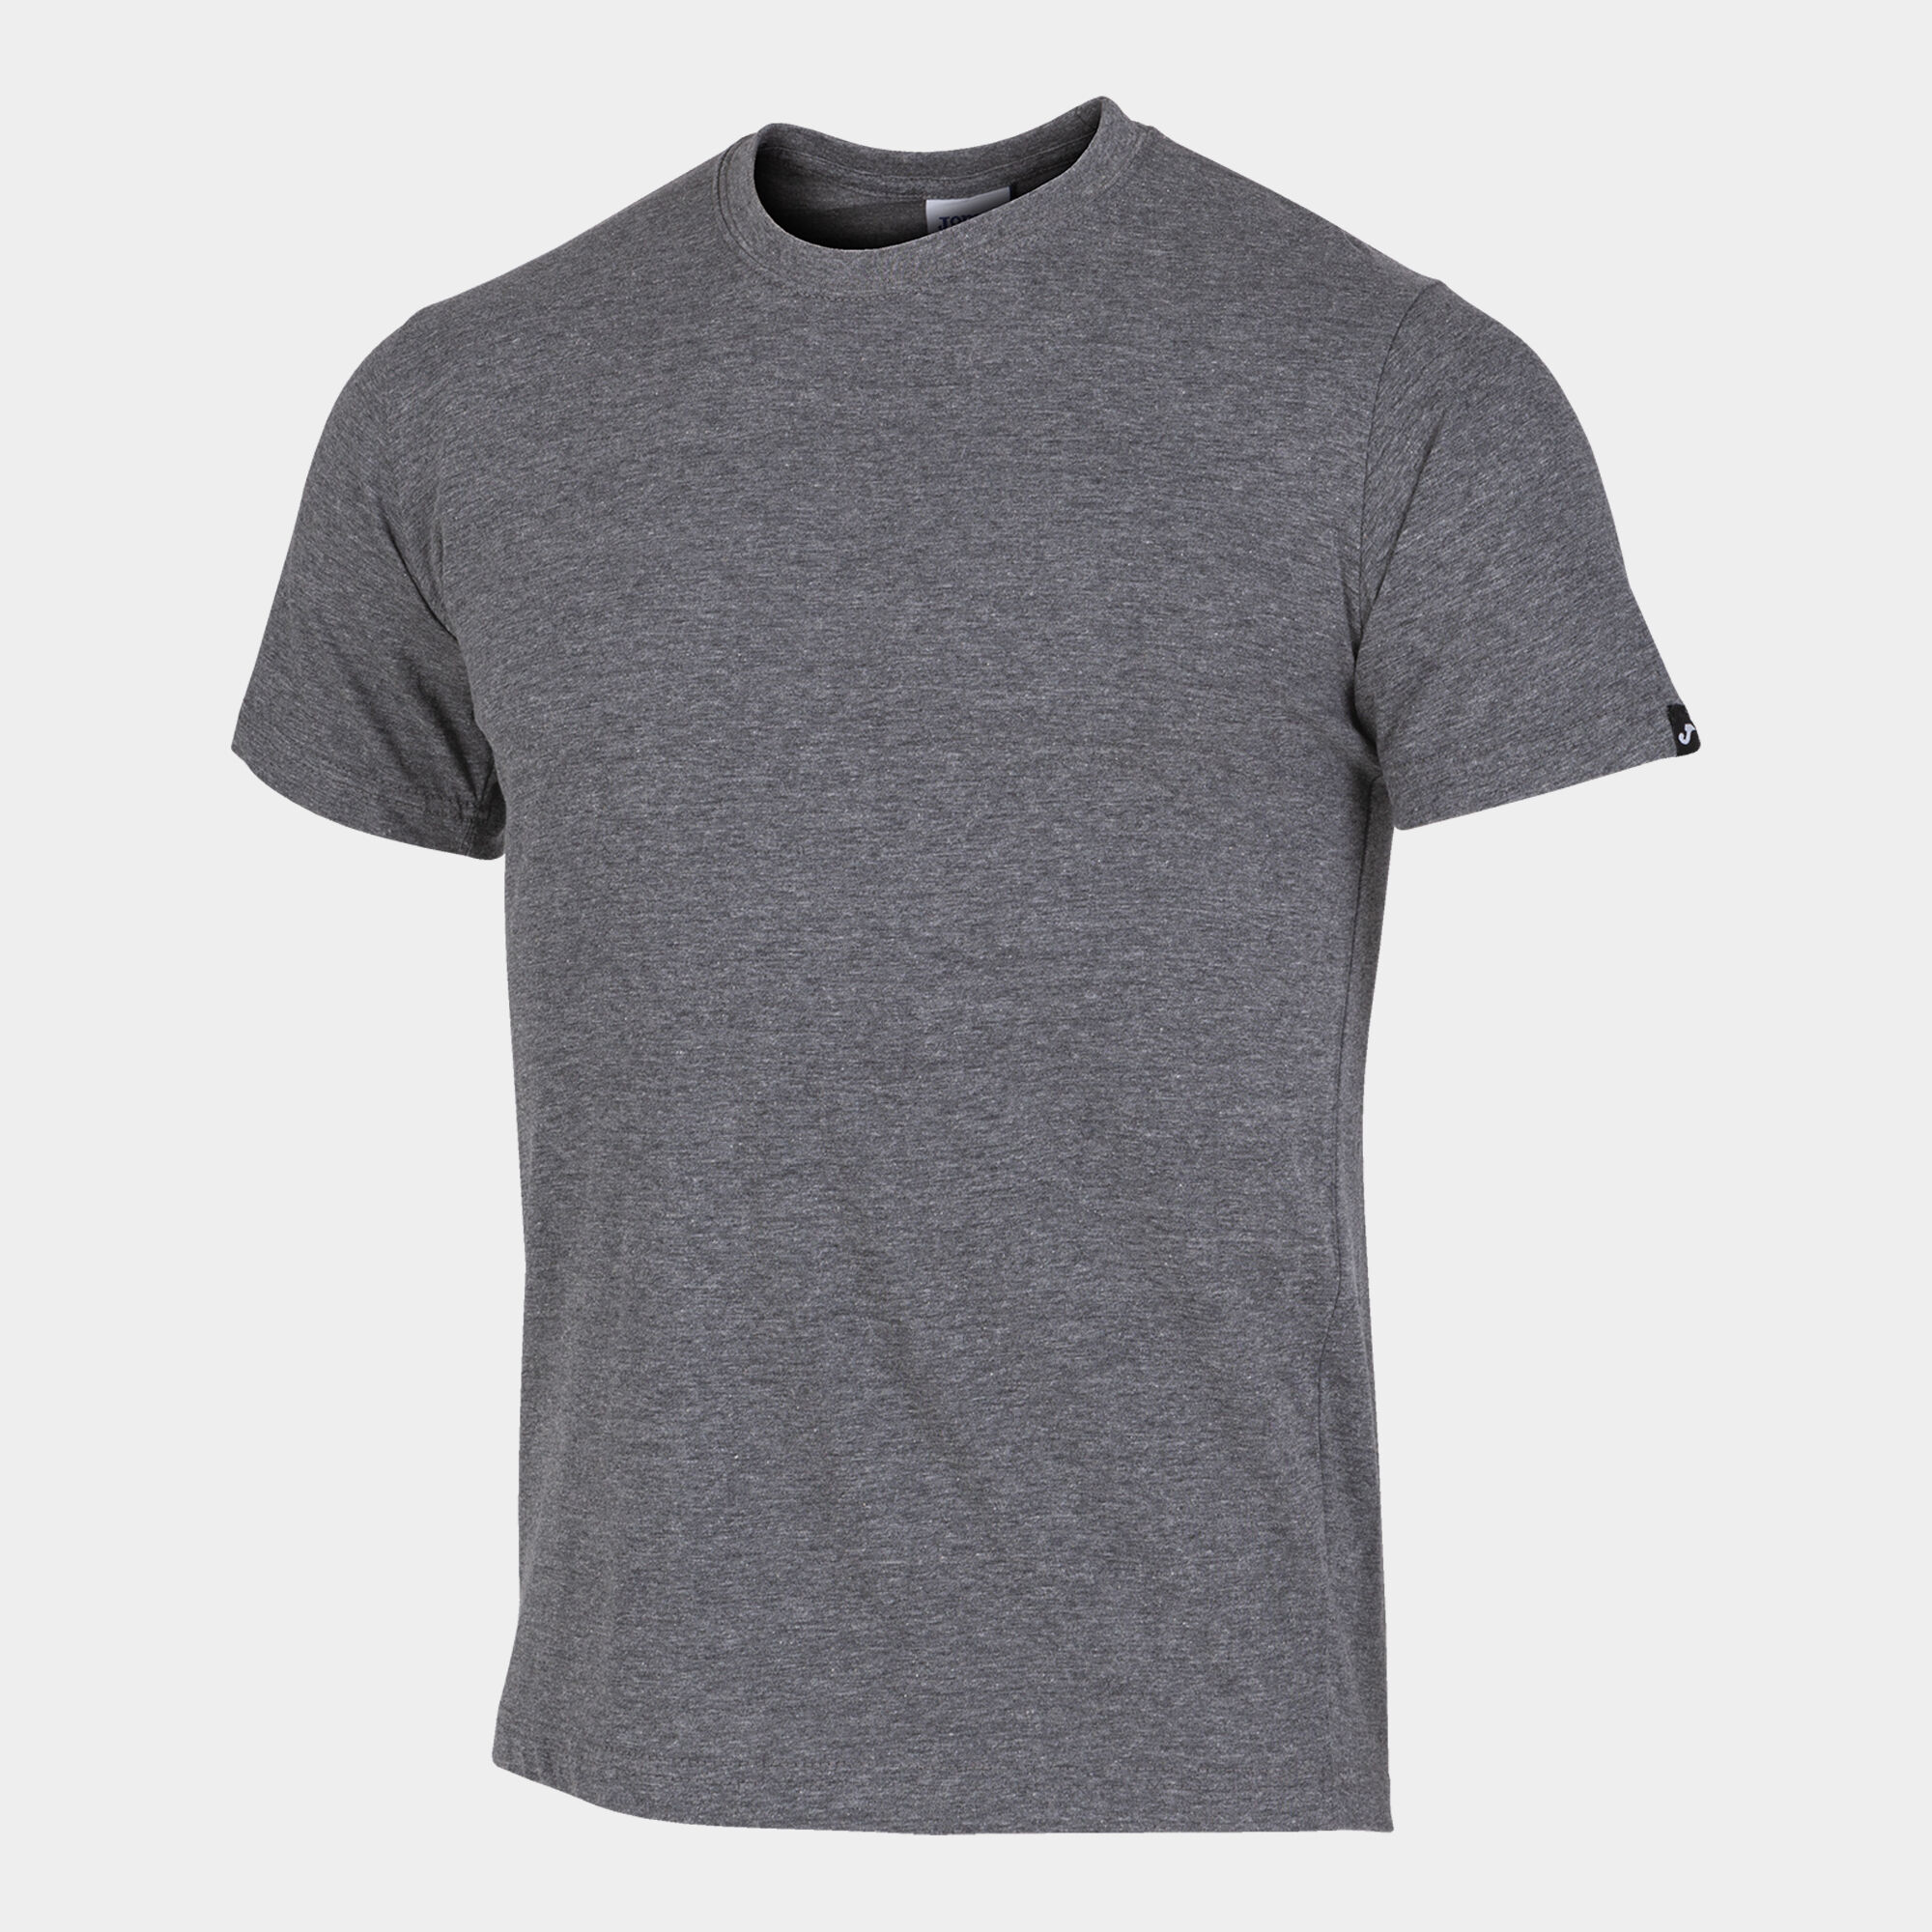 Camiseta manga corta hombre Desert gris melange